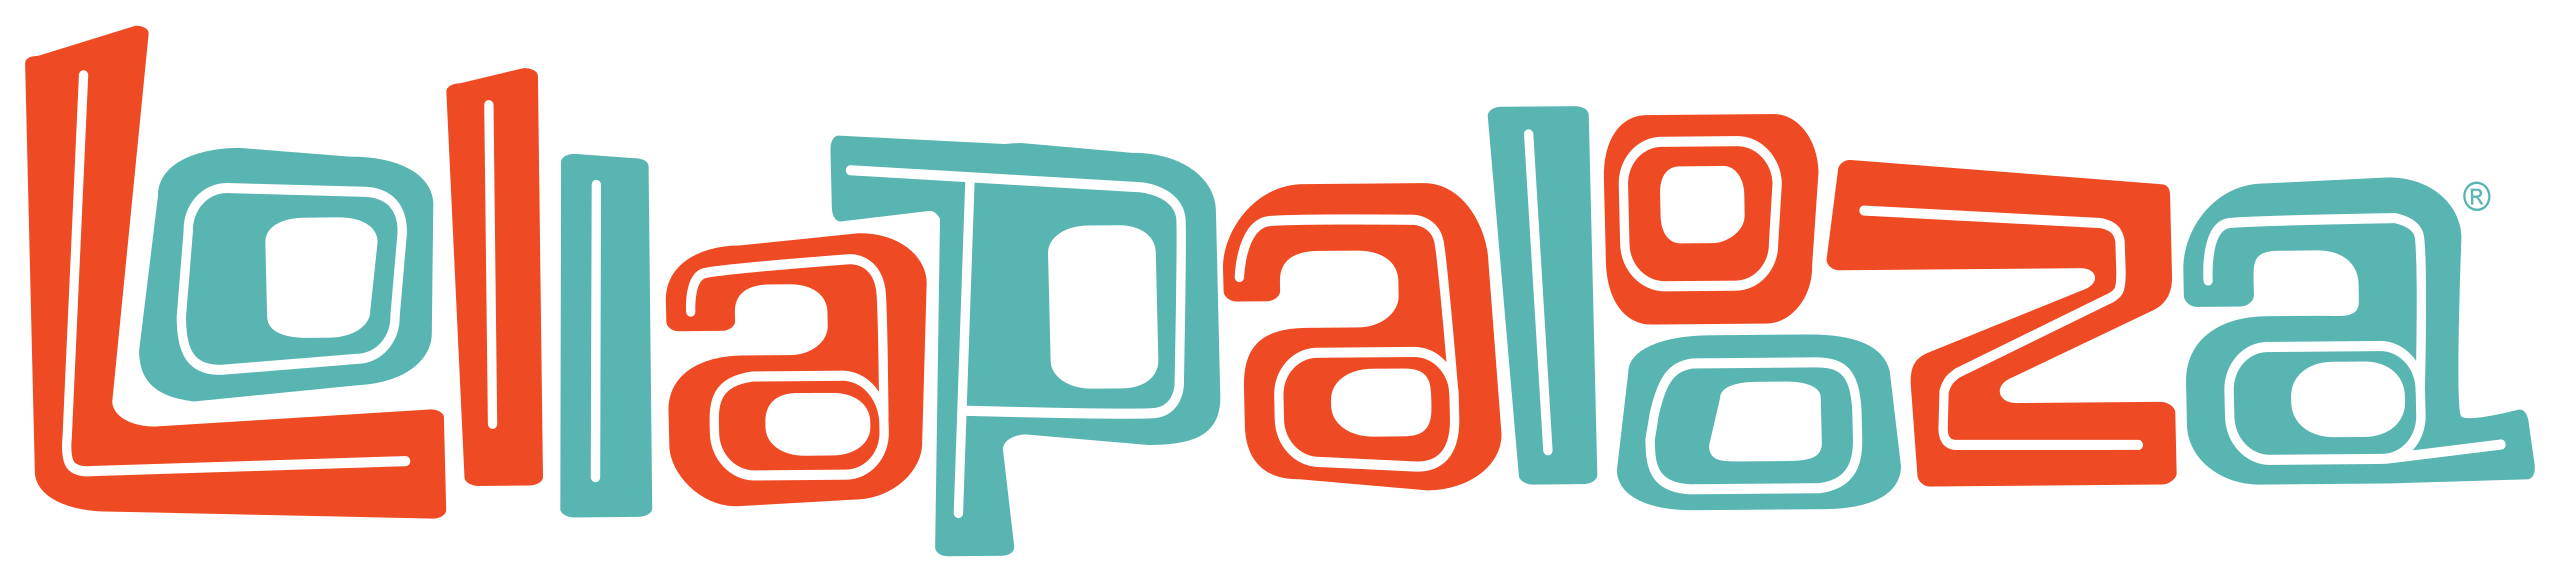 Lollapalooza_logo.svg